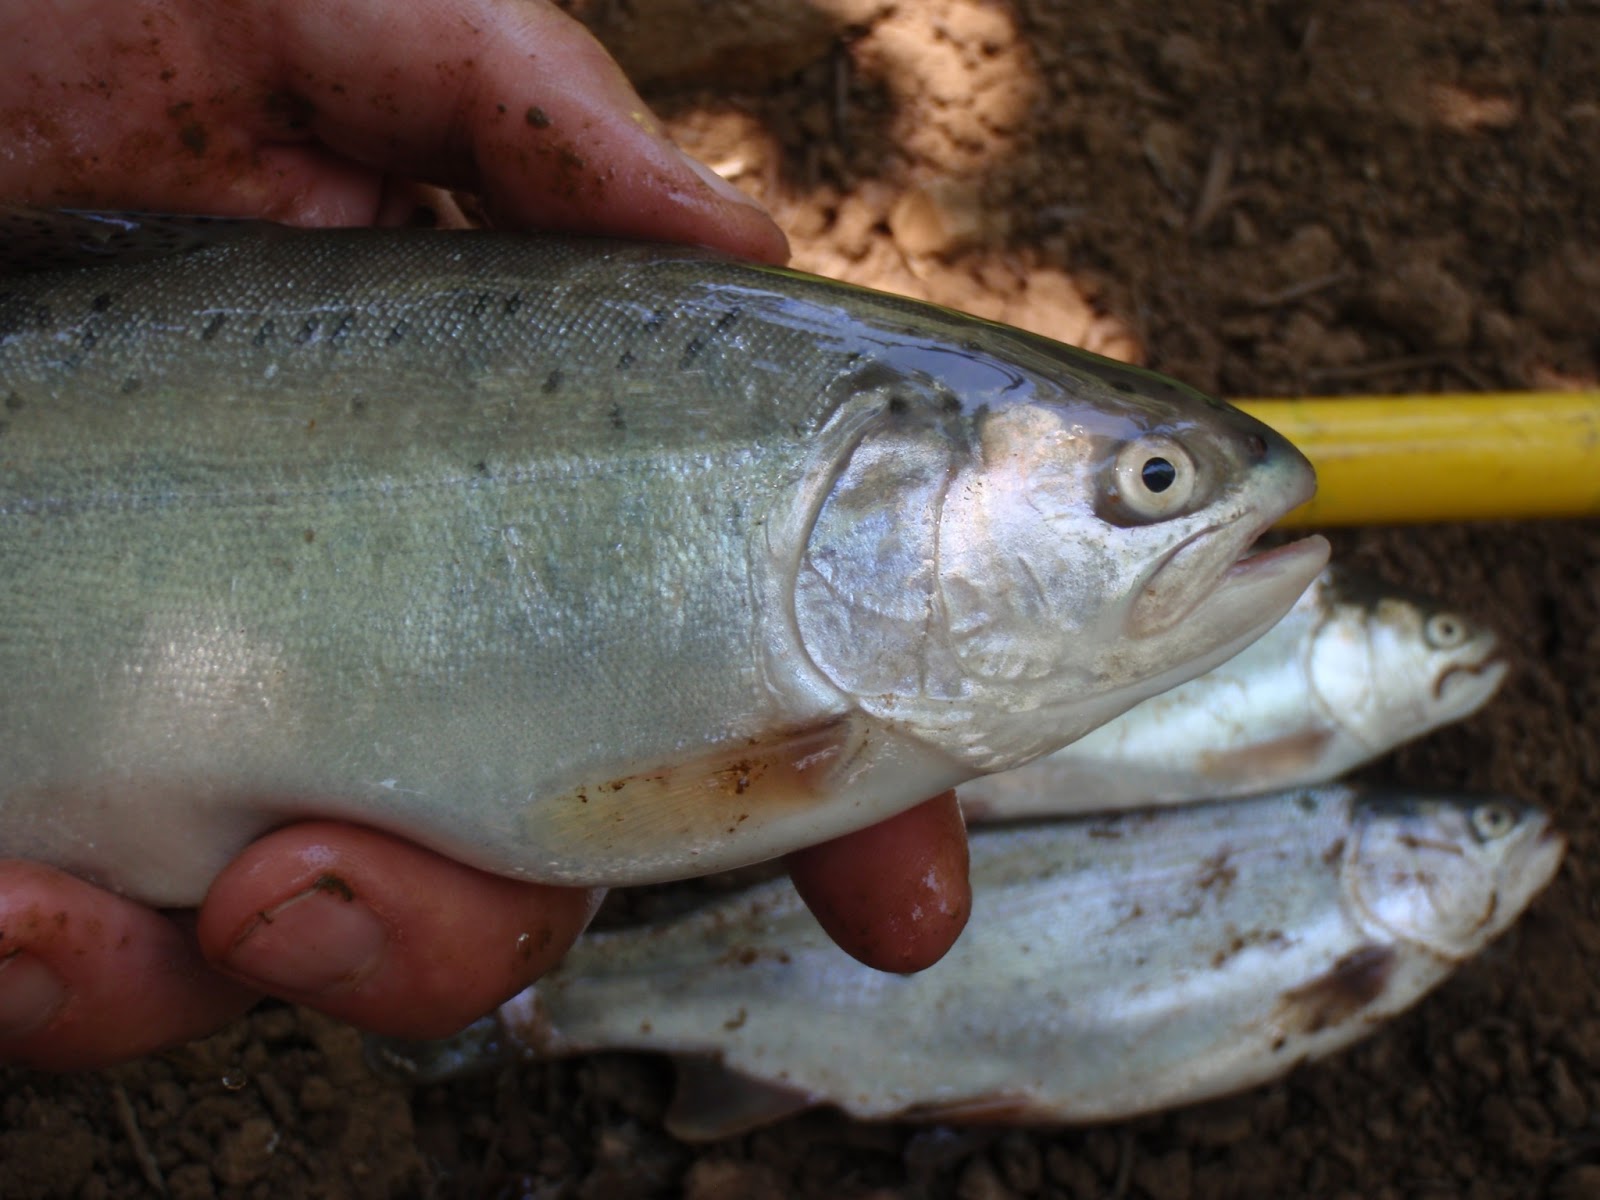 Athens Nature Journal: Peloponnesian fish survey: Let the fish speak!